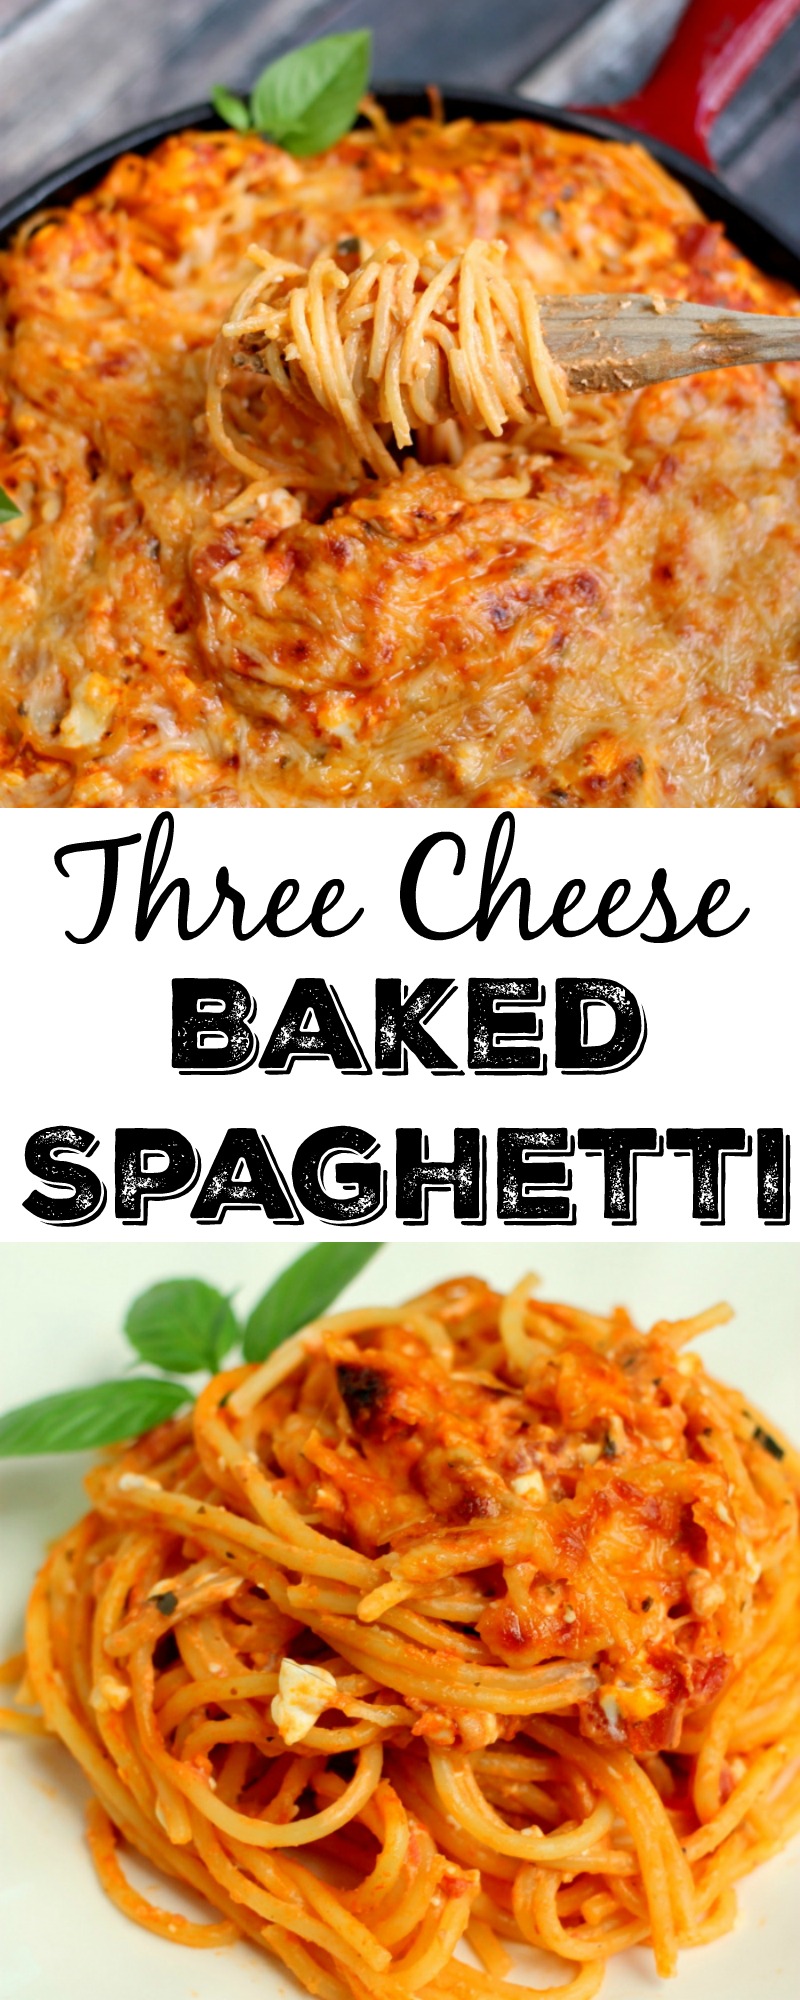 Three Cheese Baked Spaghetti - A Yummy Baked Spaghetti Recipe